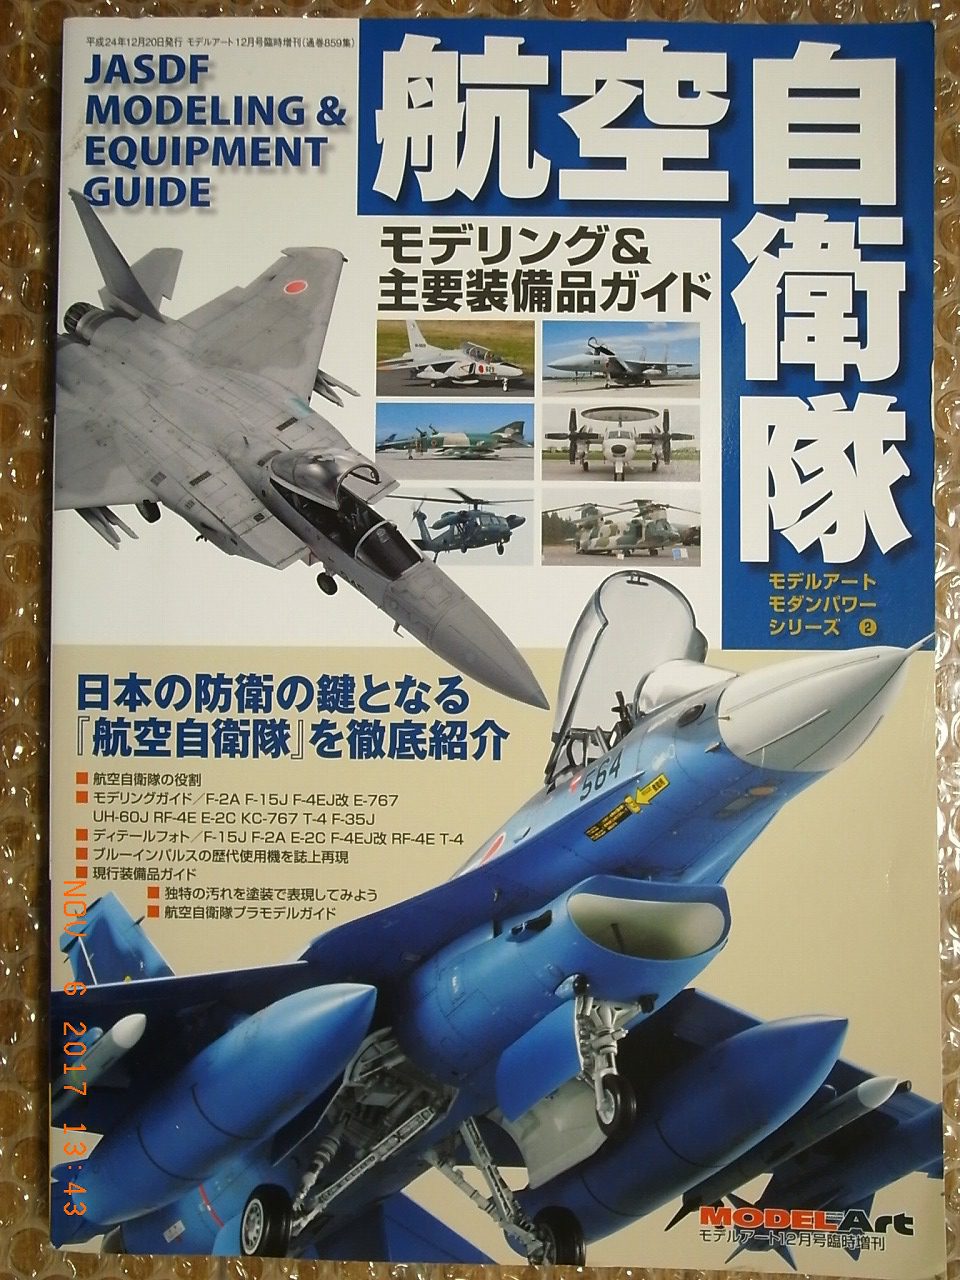 JASDF AIRCRAFT MODELING GUIDE BOOK, MODEL ART #859